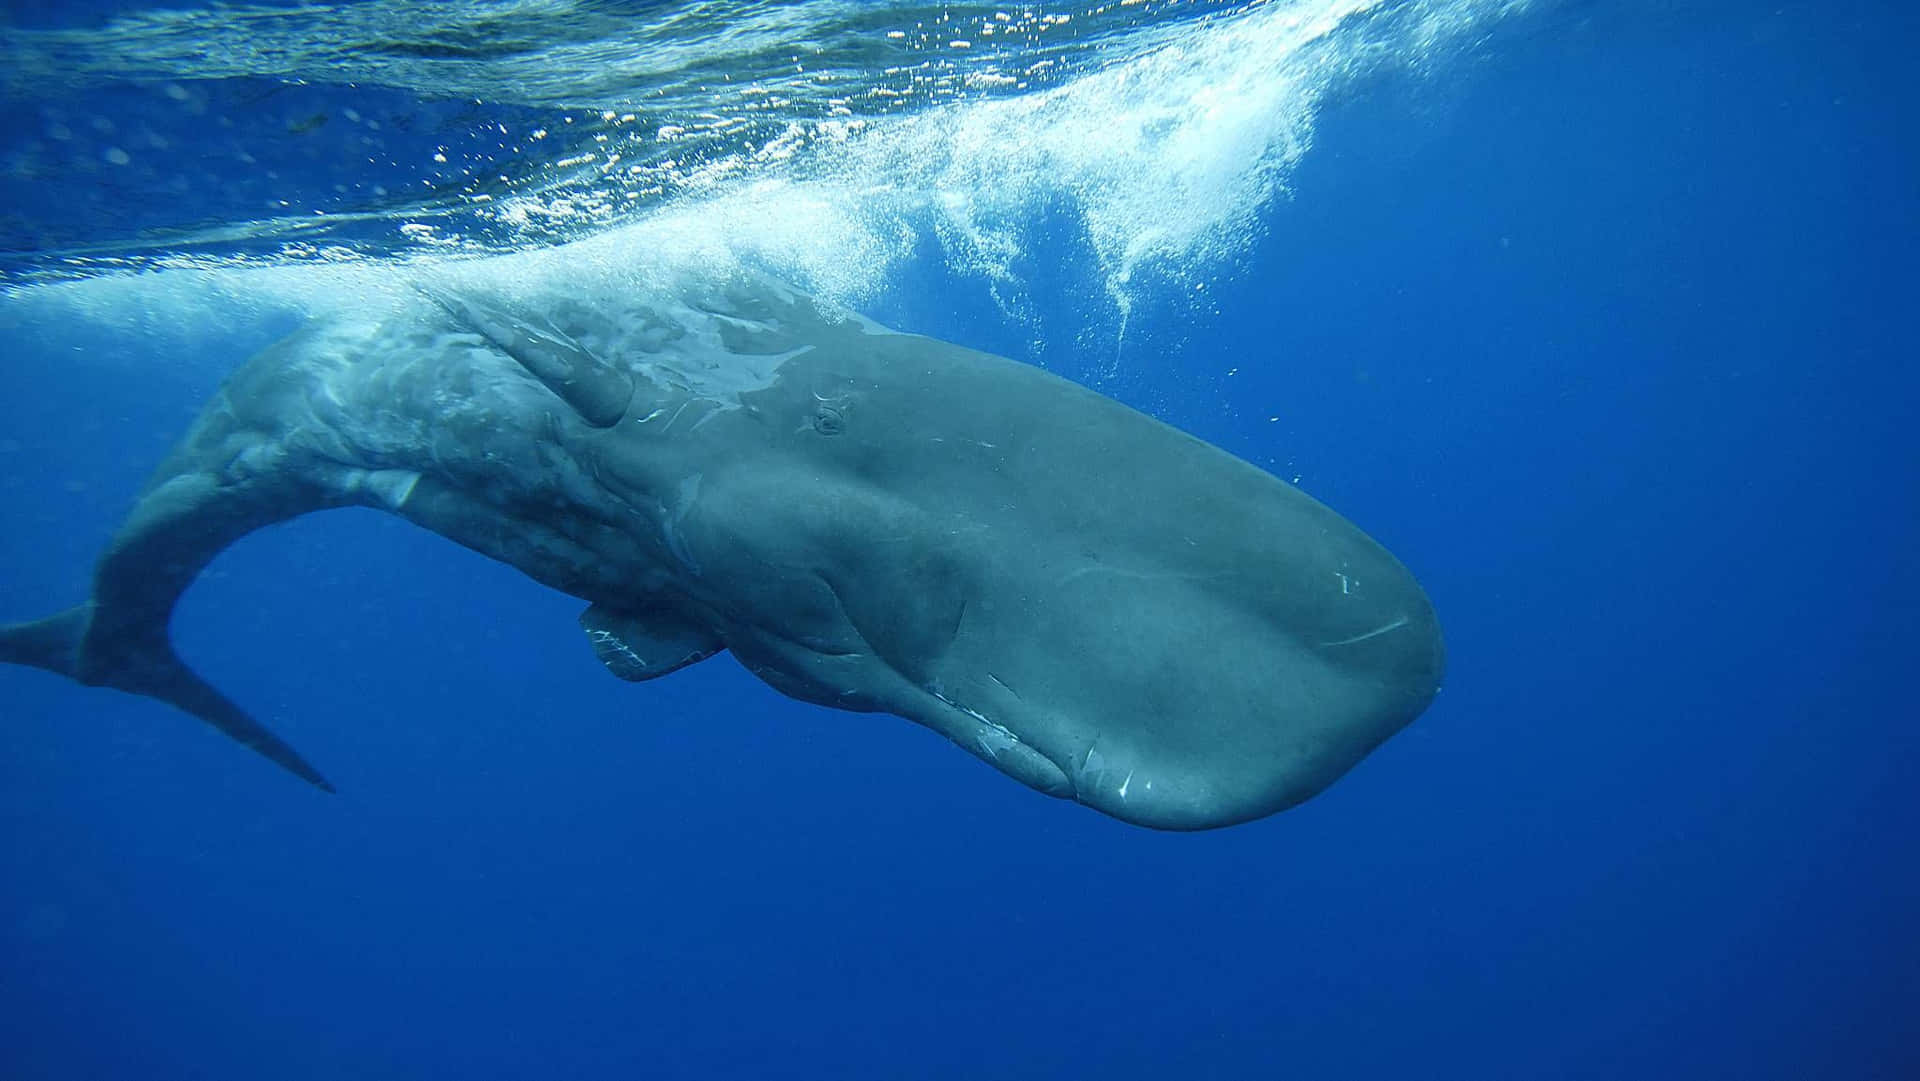 Unagrande Balena Nuotare Nell'oceano